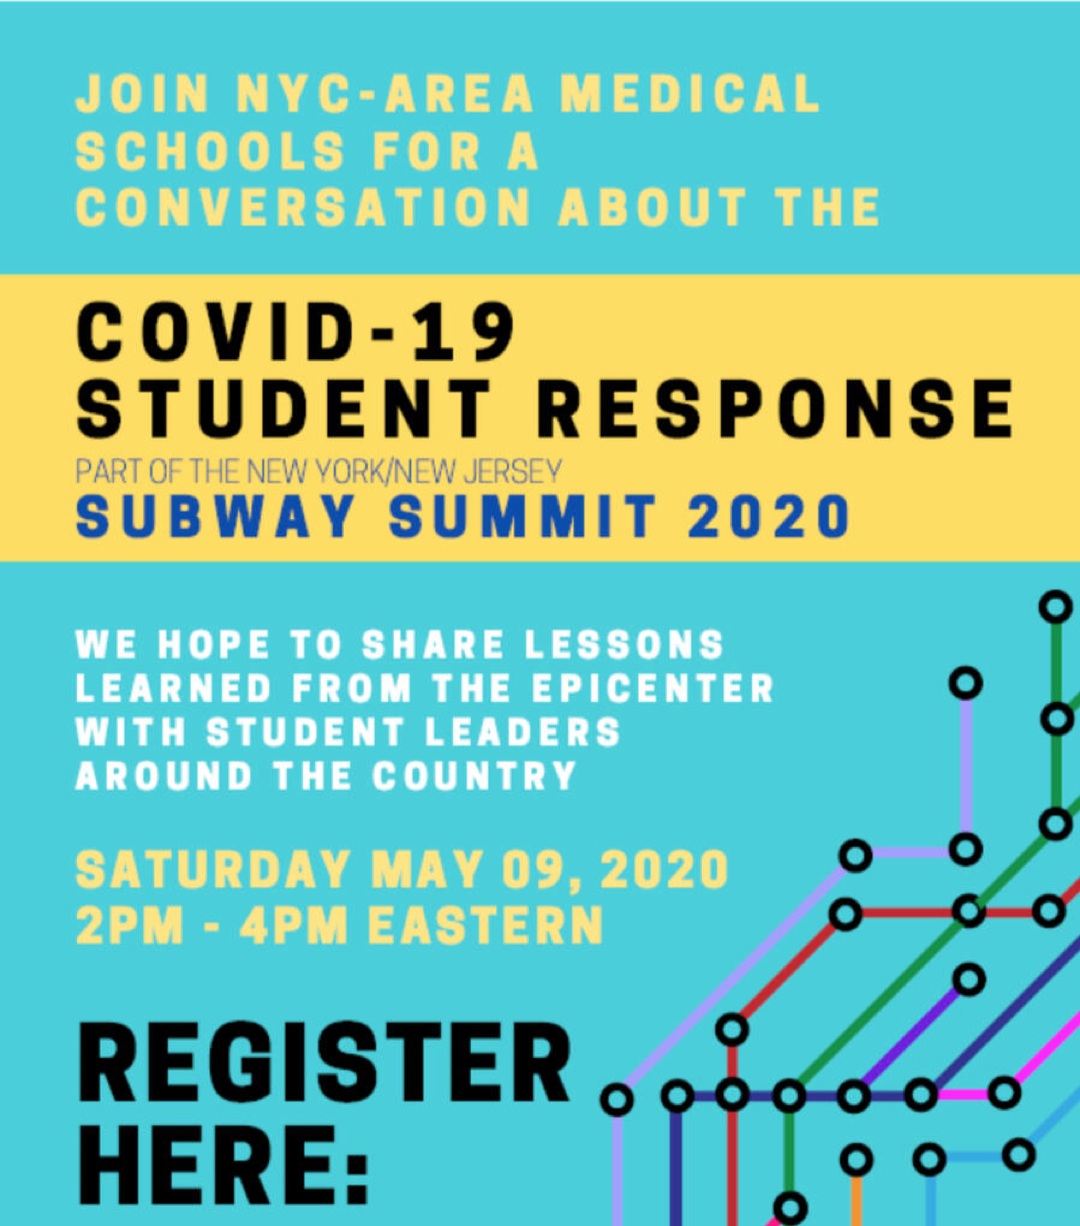 Registration Poster for Medical Education Subway Summit 2020 
<br />